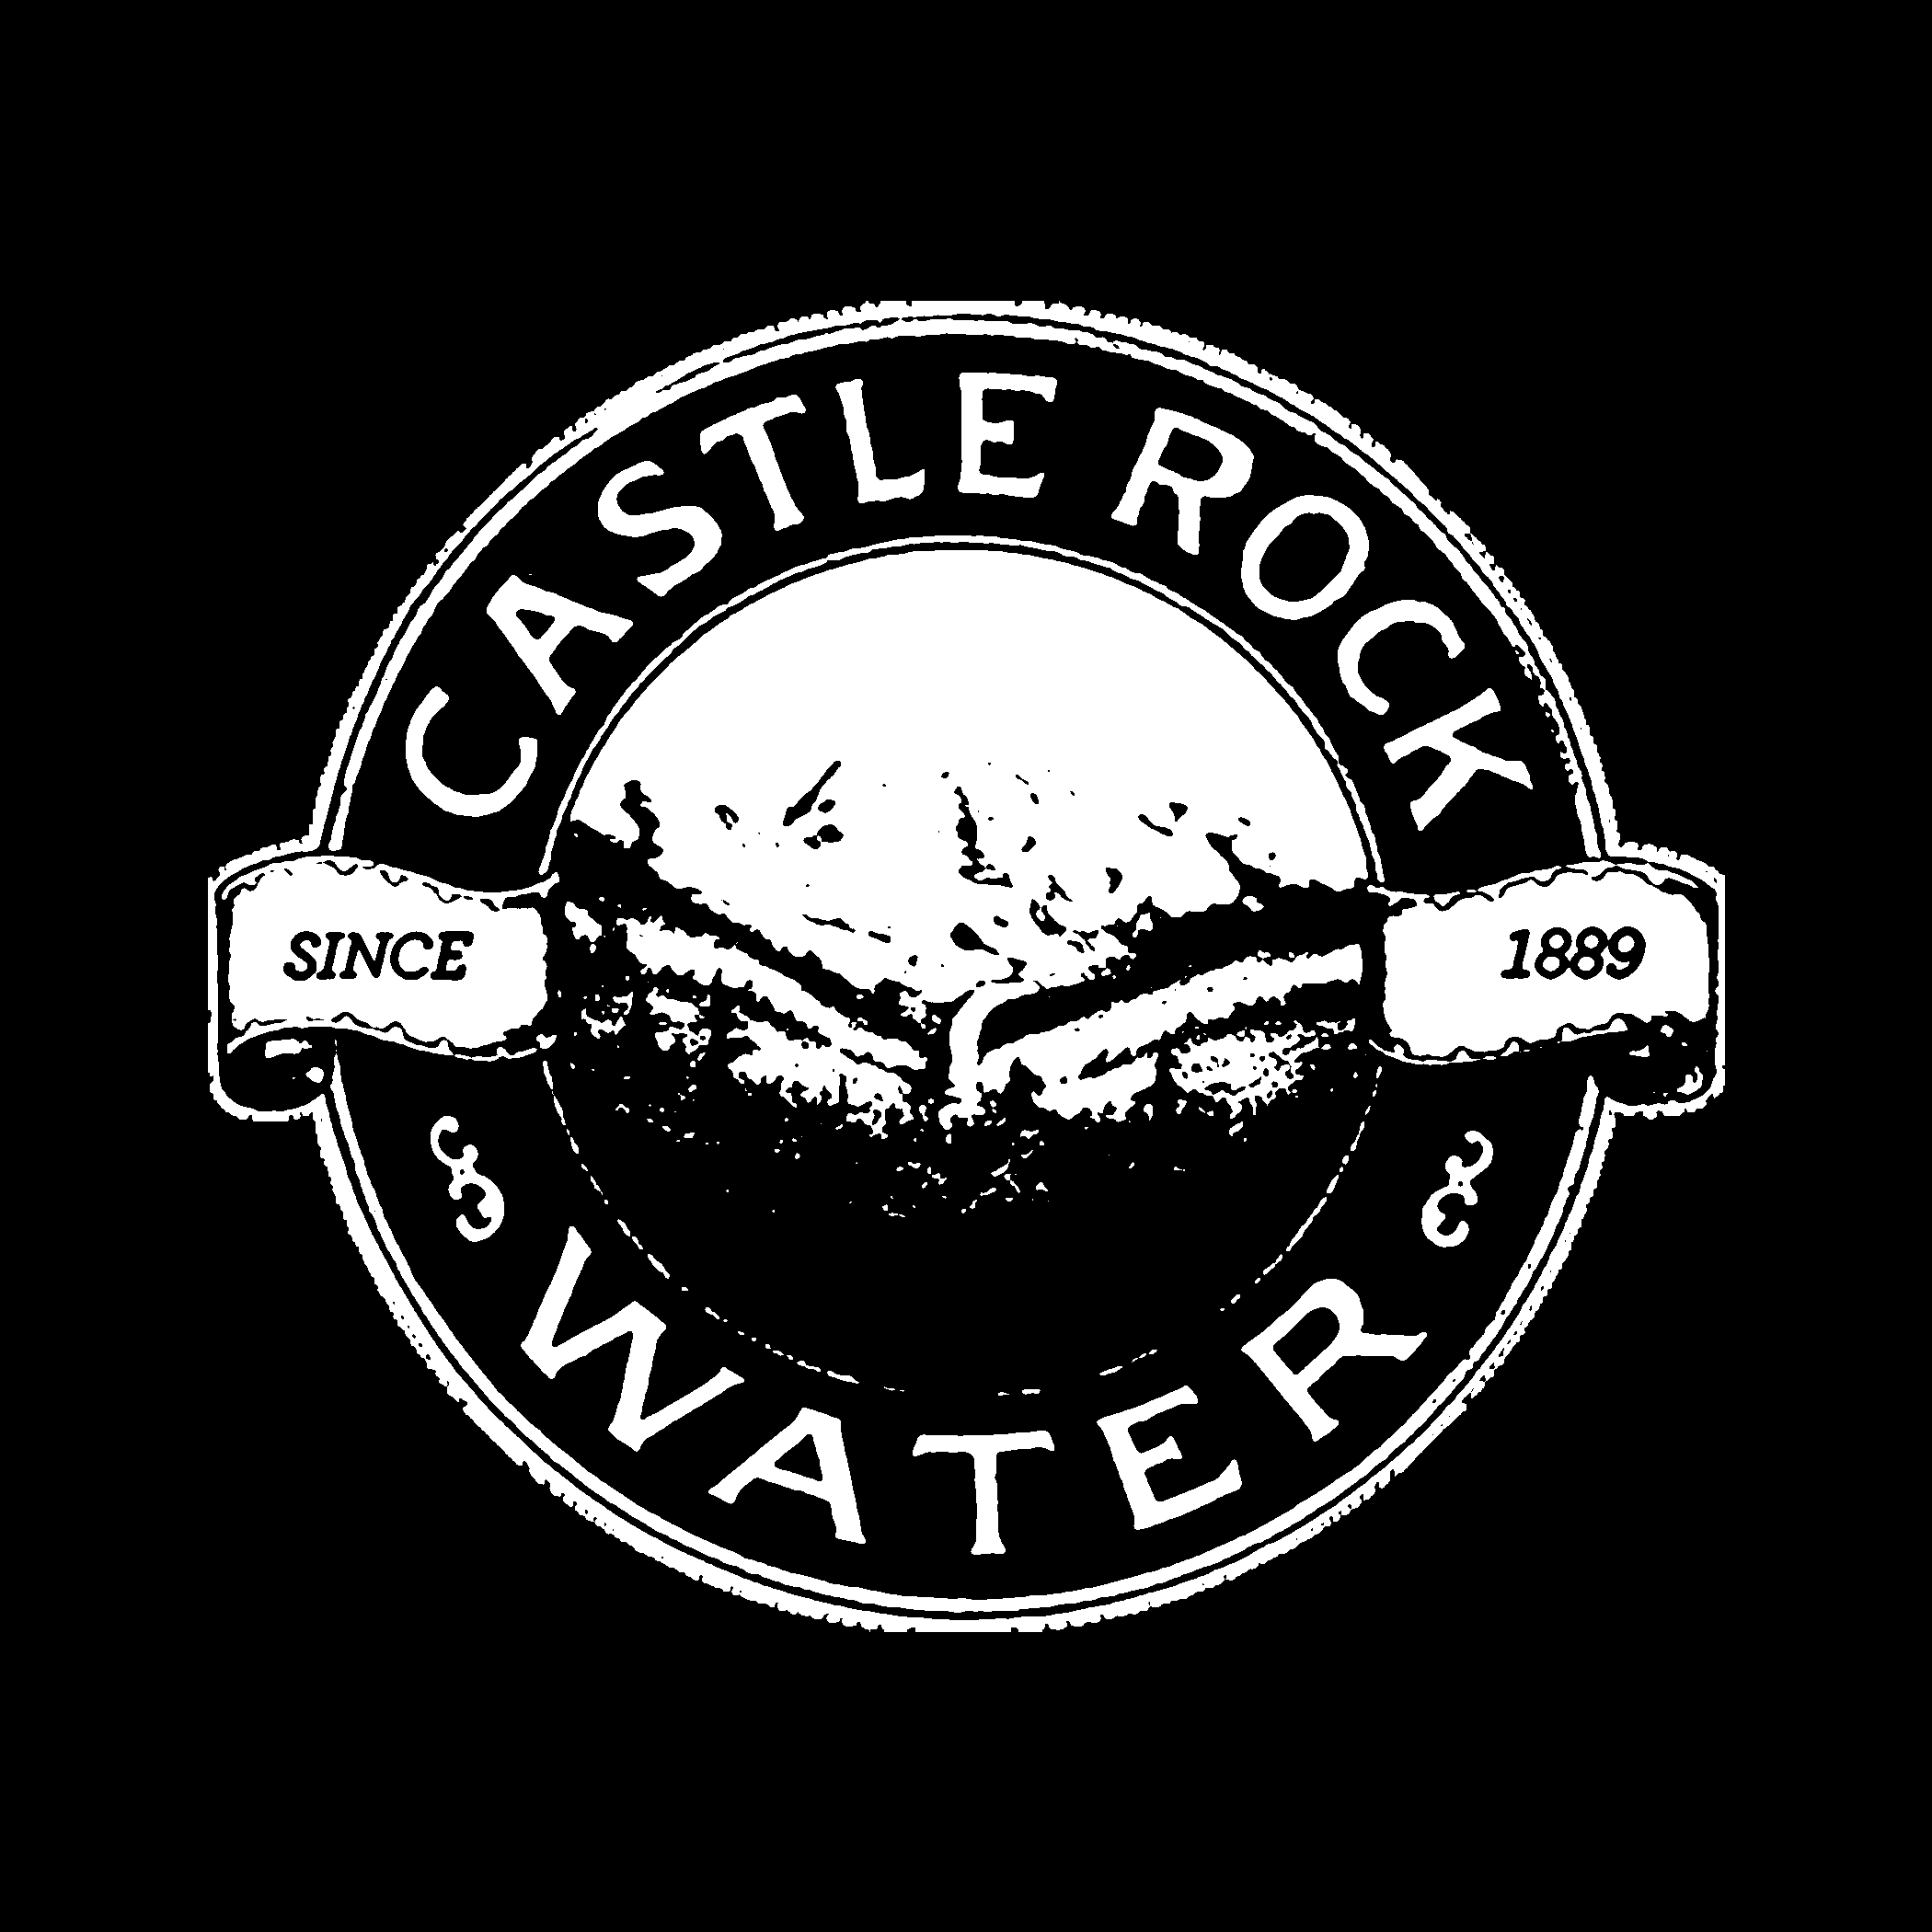 Castle-Rock